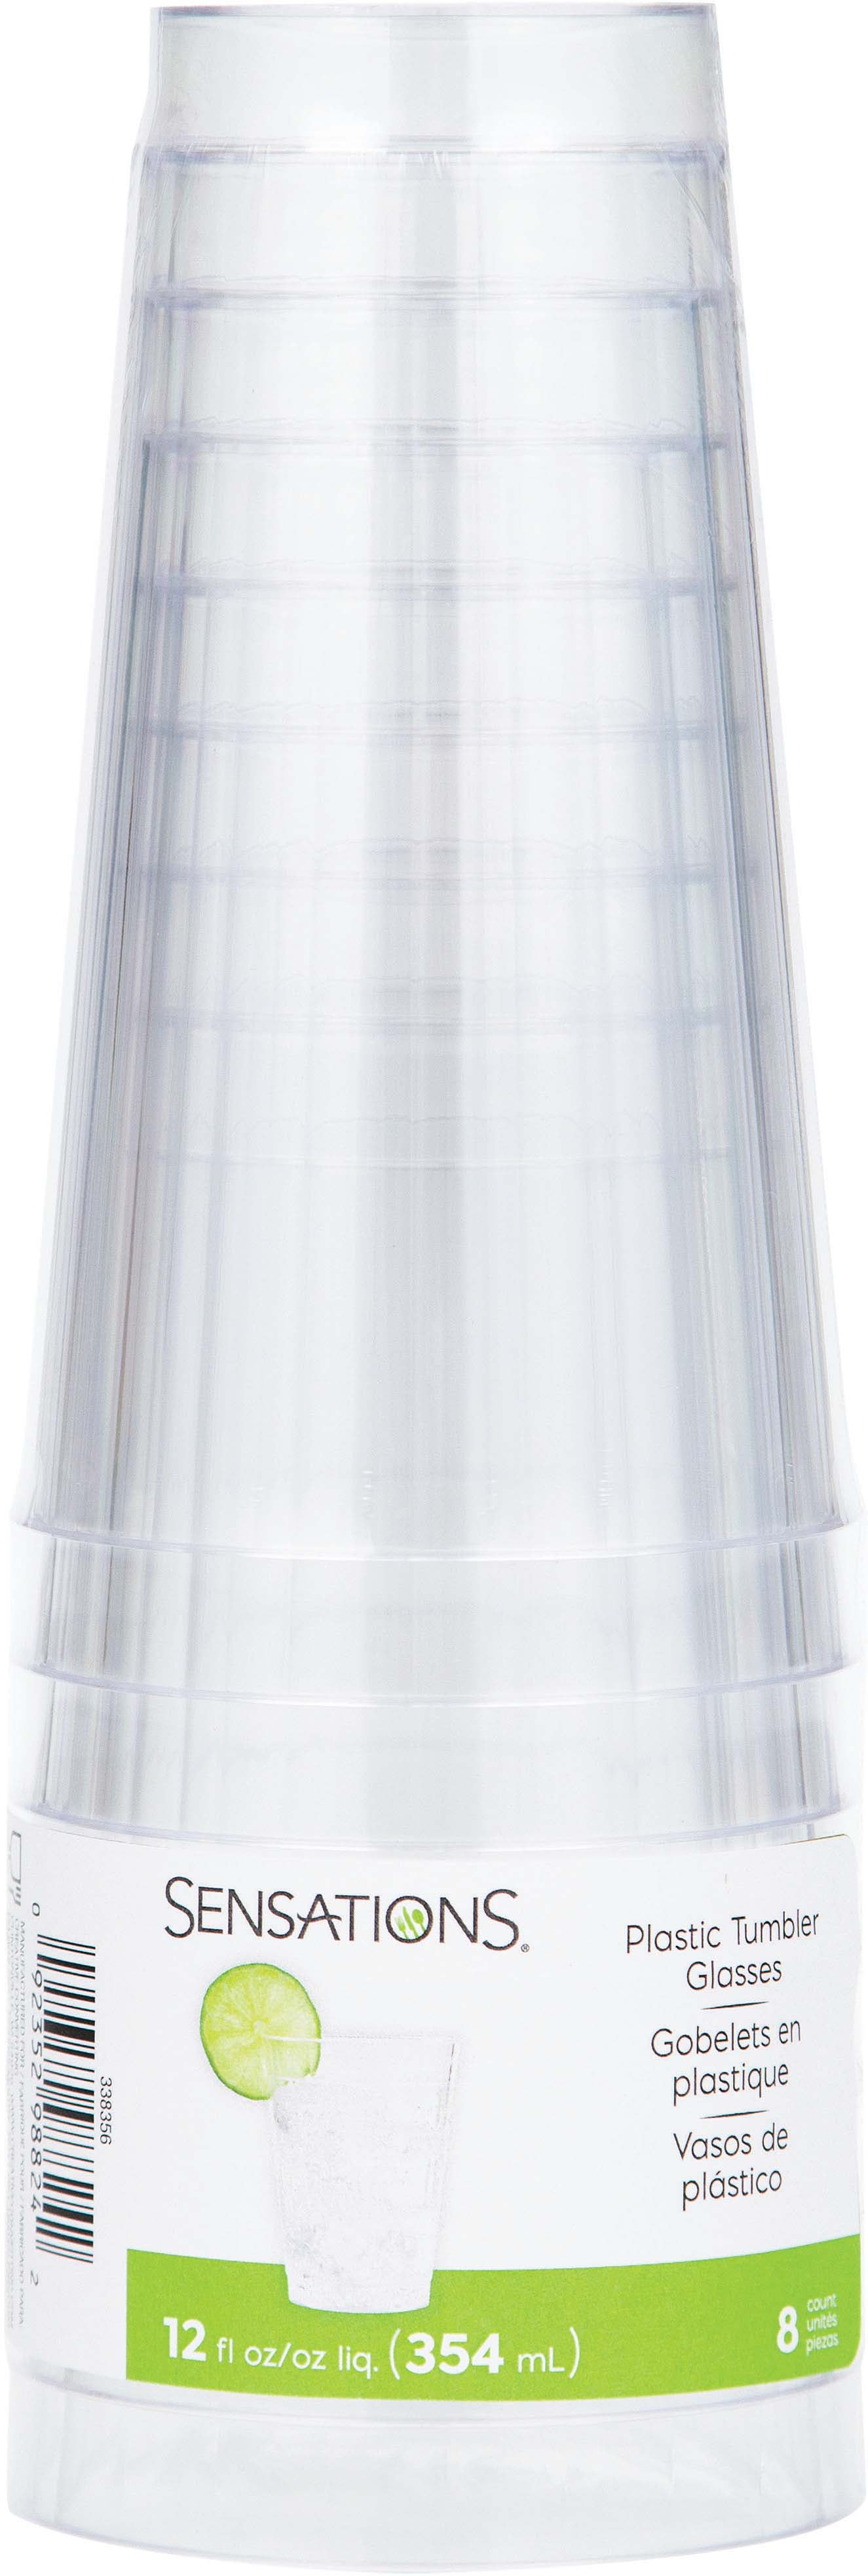 Gamkarvale plastic cup 8 pcs 350 ml